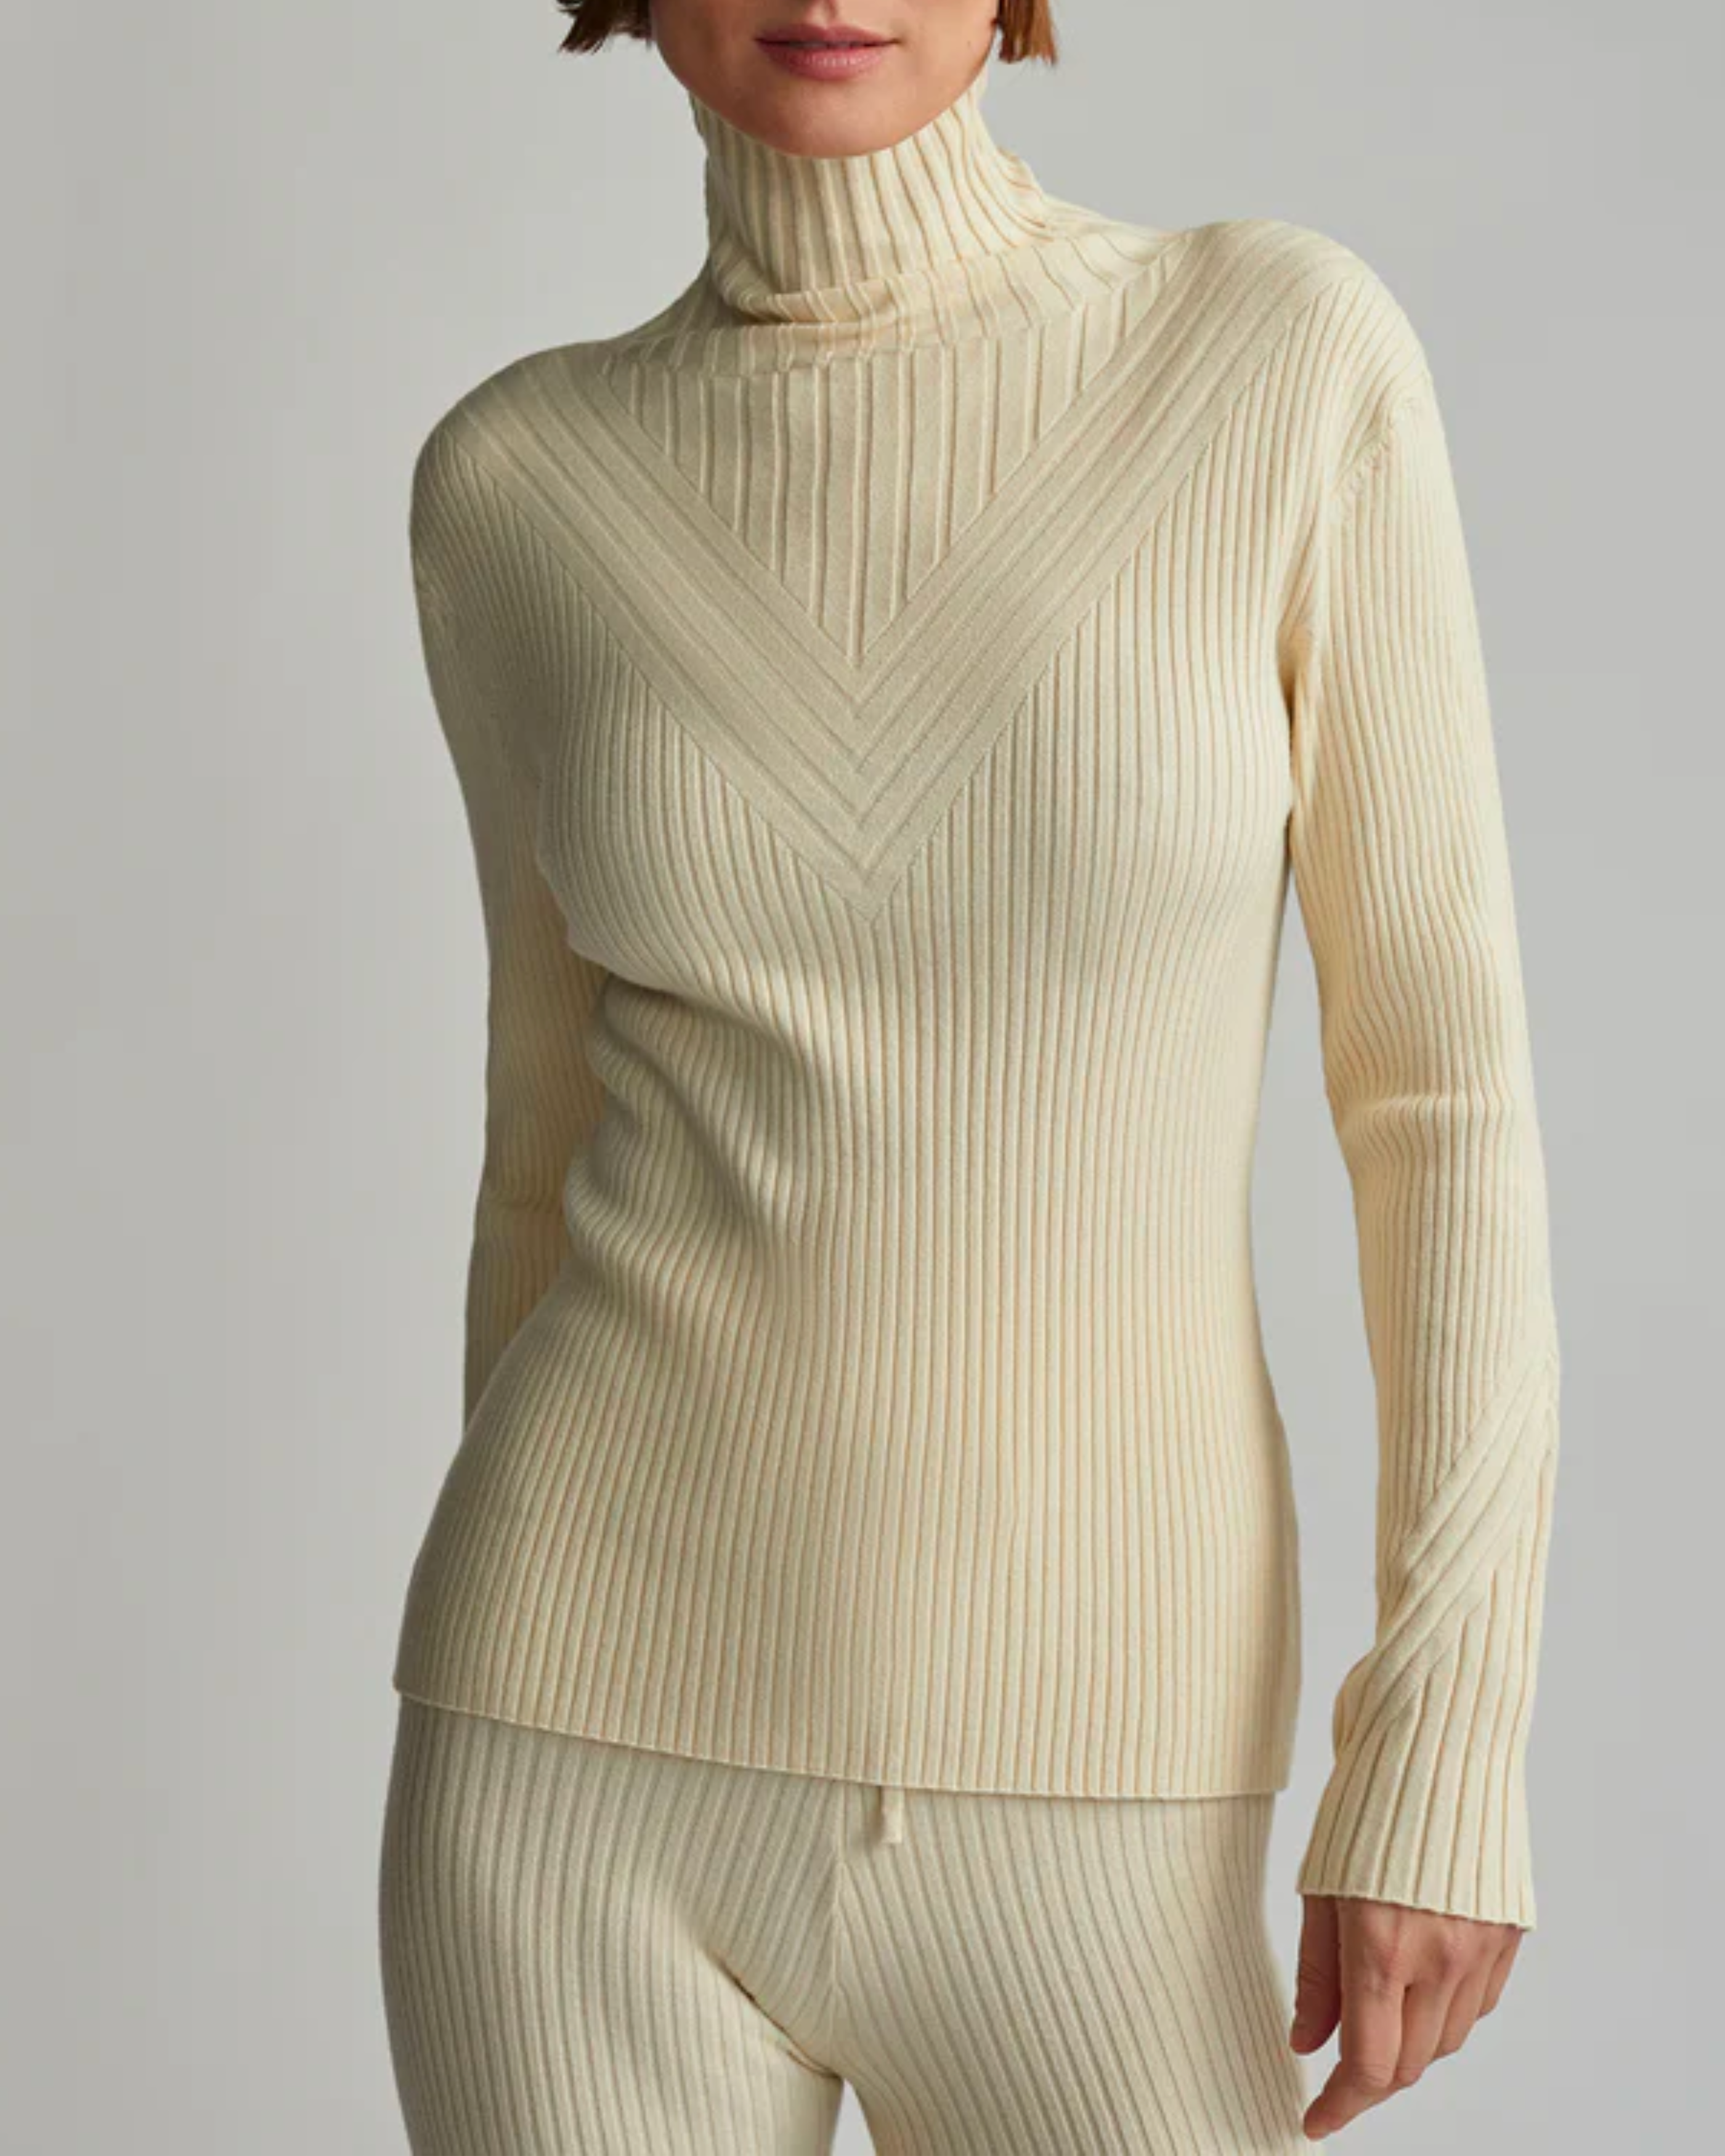 Varley Esma Rib Roll Neck Sweater in White Cap Grey